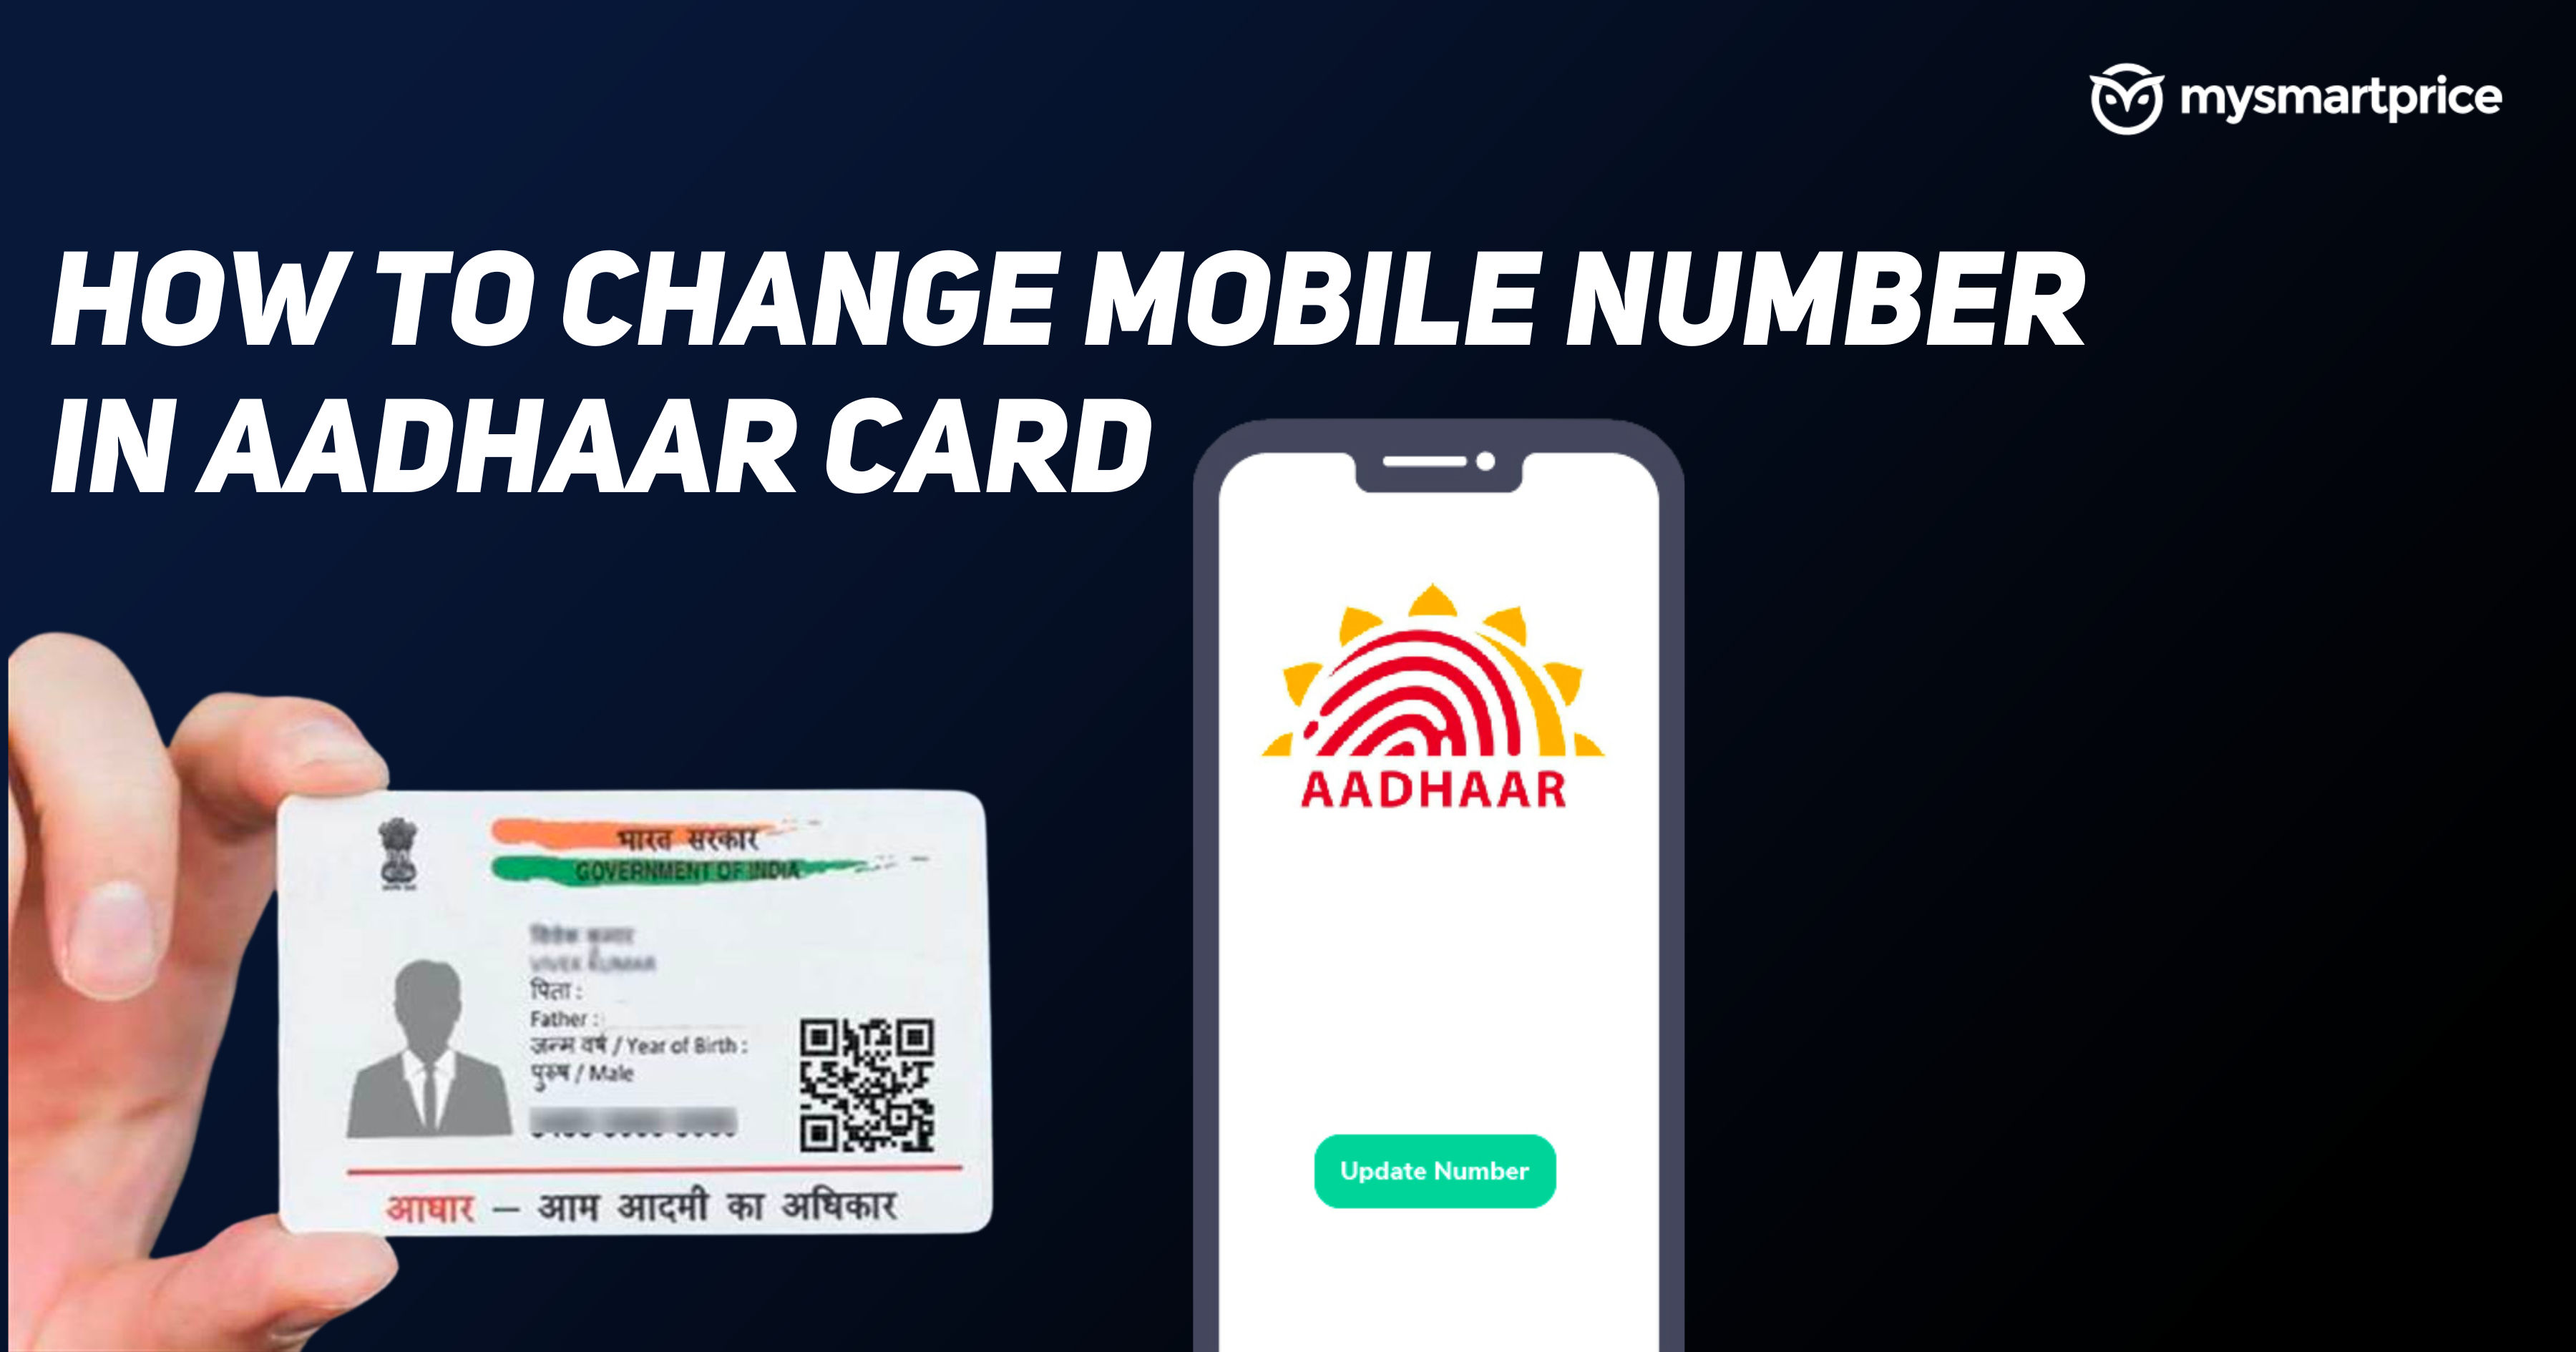 dhaar How To Change Or Update Mobile Number In dhaar Card Mysmartprice